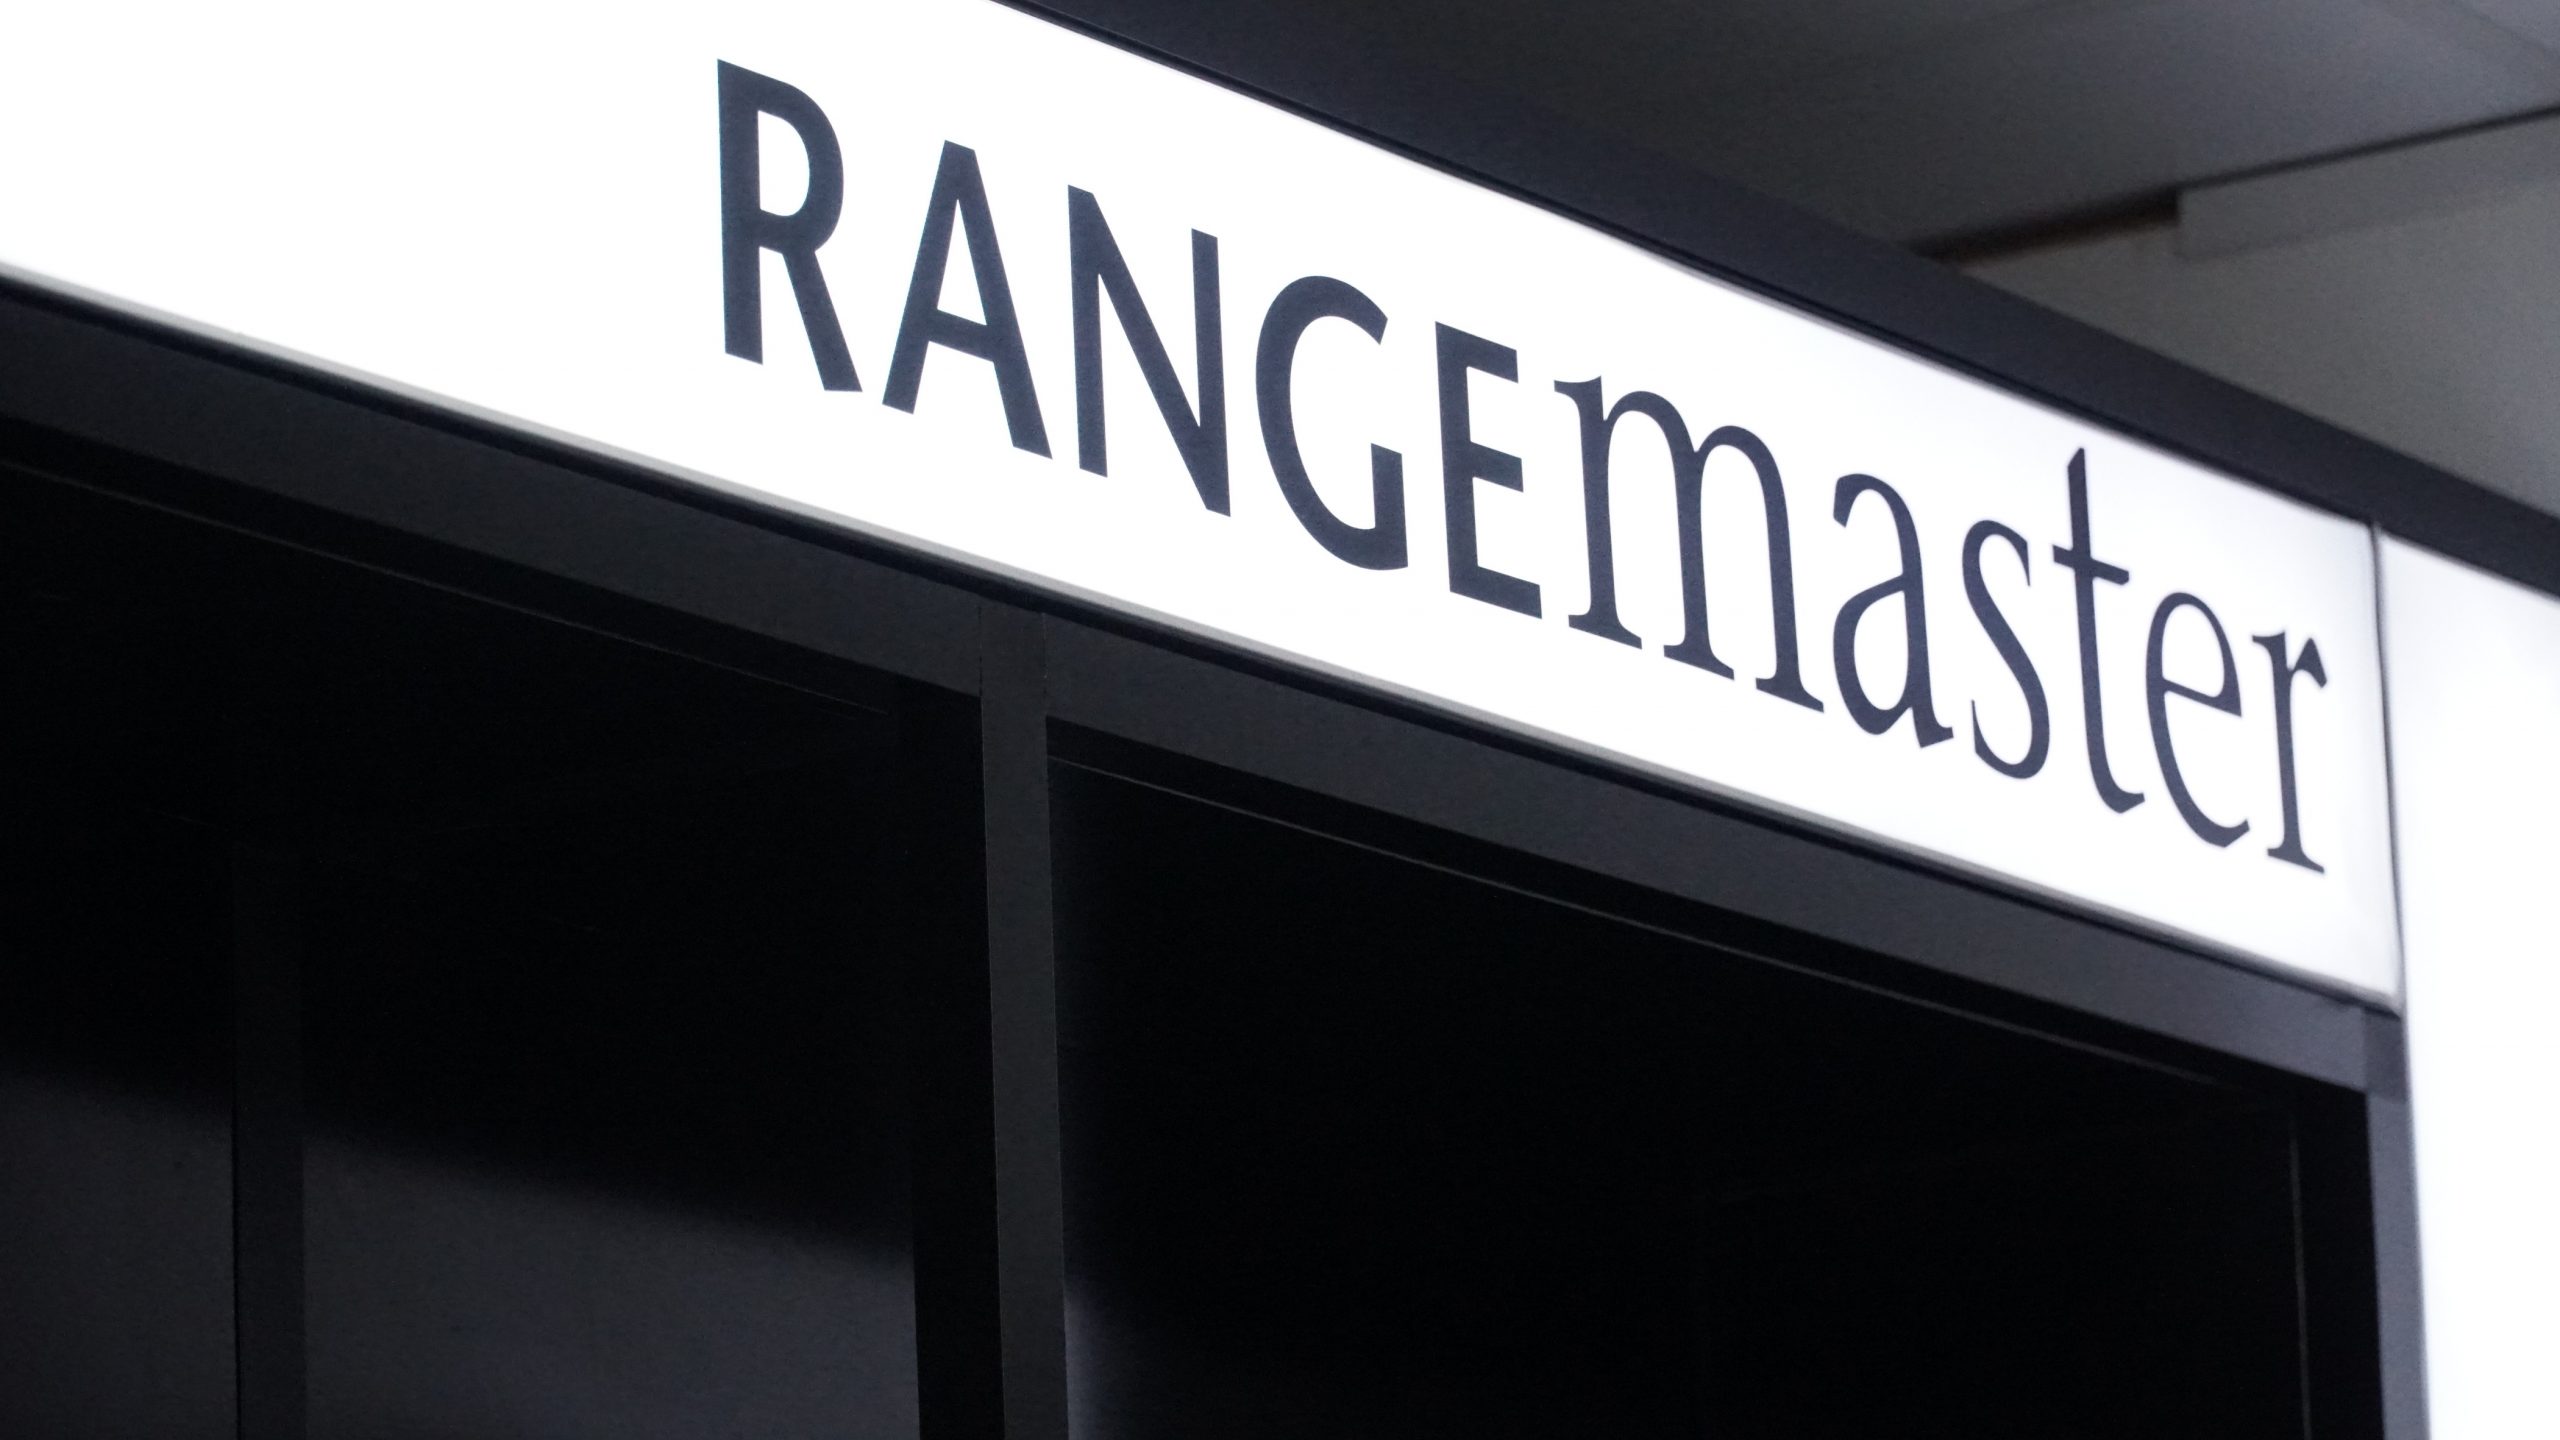 Avensys Kitchens showroom Rangemaster sign